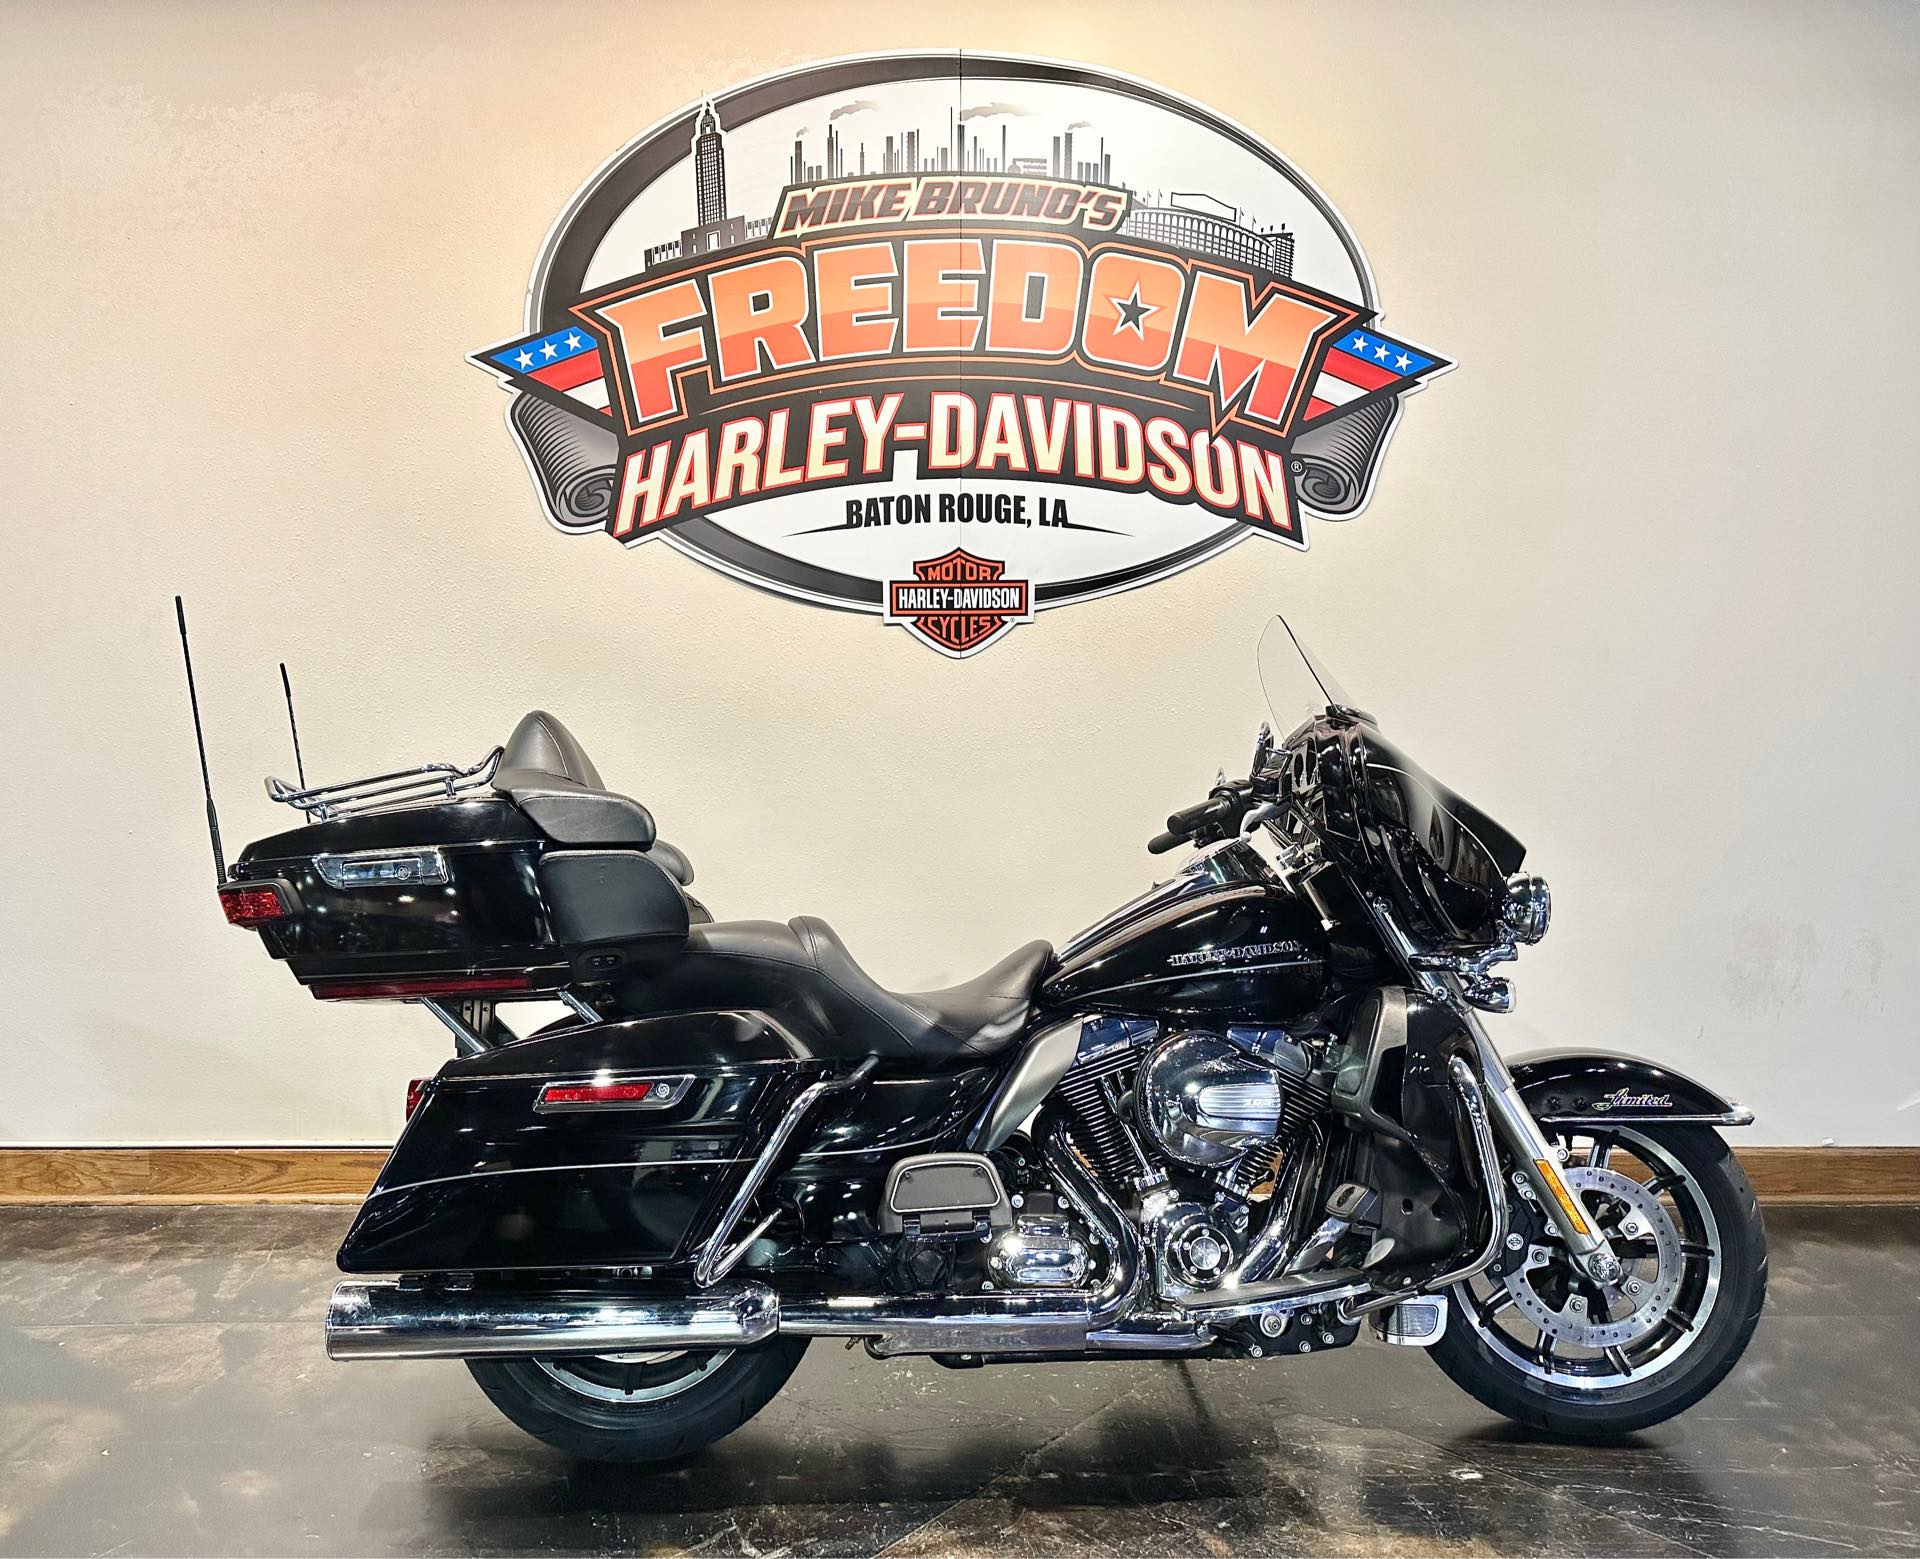 2014 Harley-Davidson Electra Glide Ultra Limited at Mike Bruno's Freedom Harley-Davidson